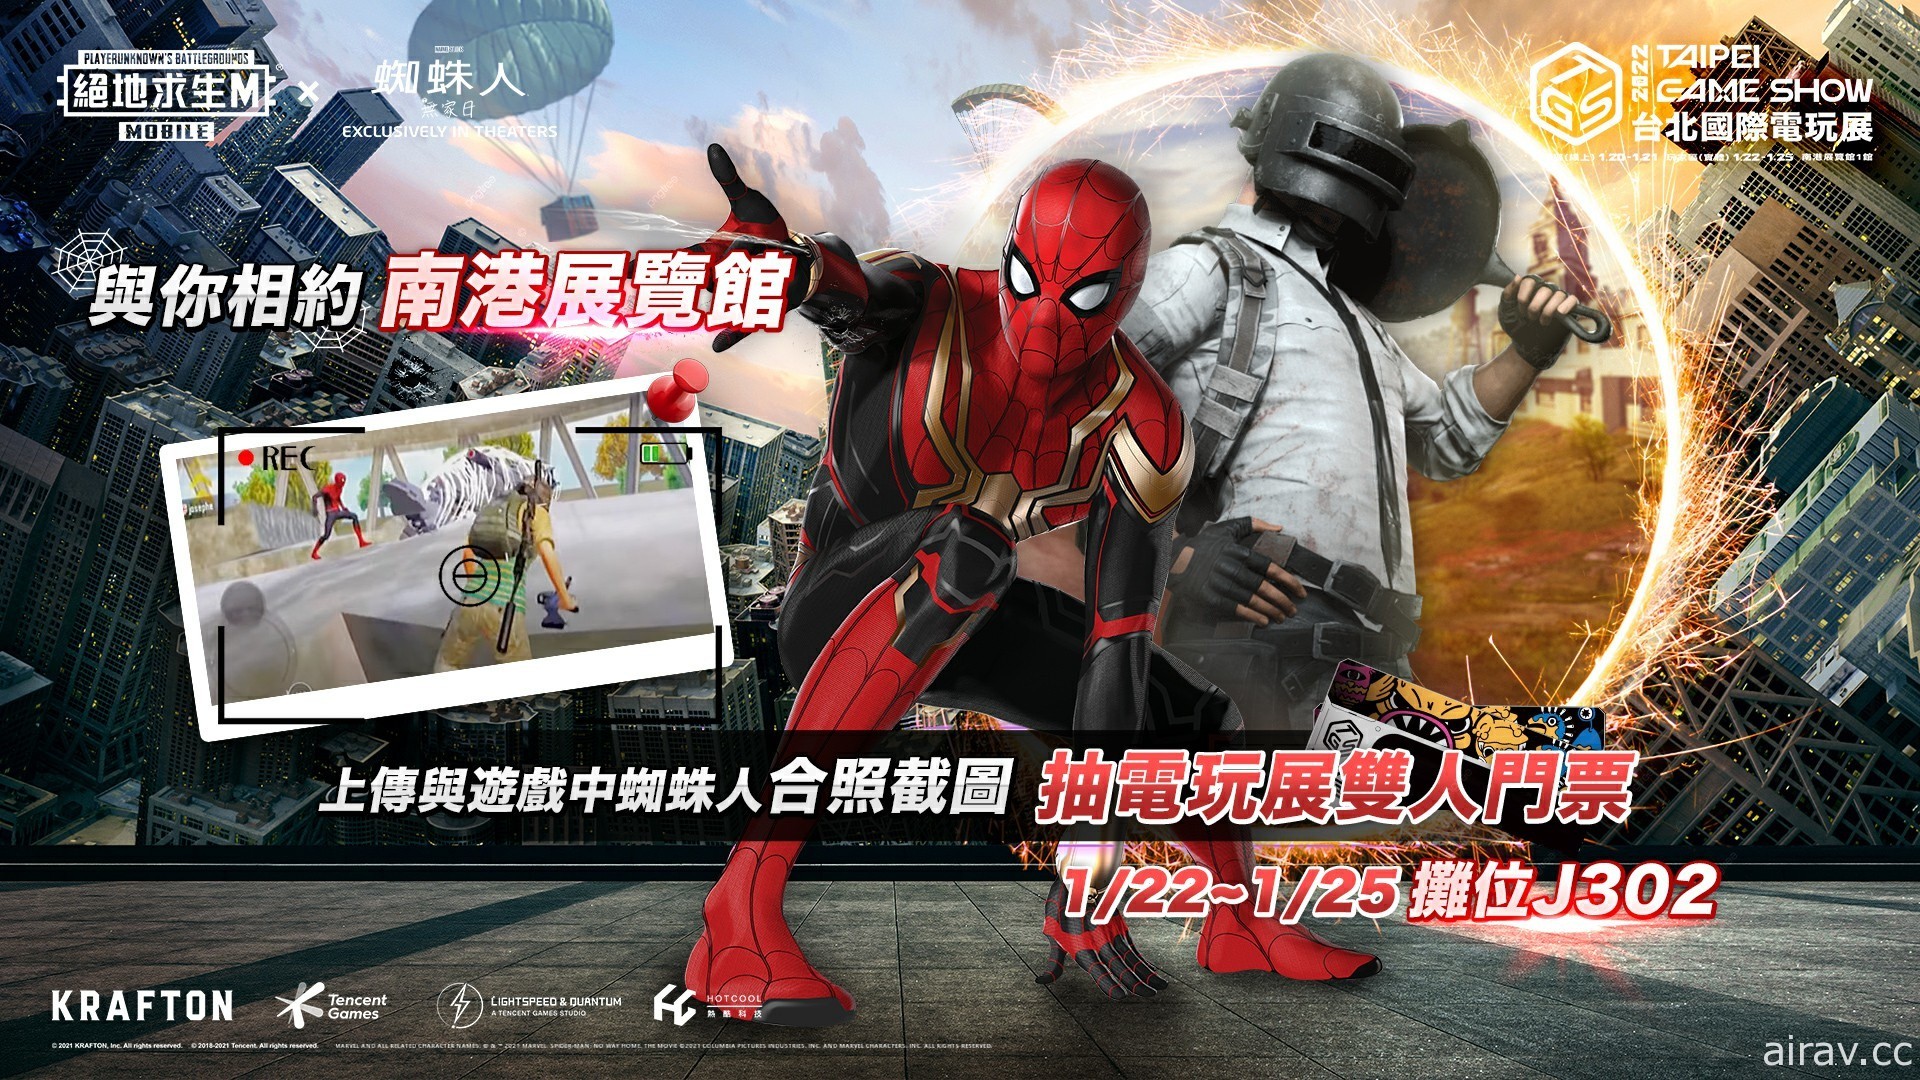 【TpGS 22】《絕地求生 M》蜘蛛人聯動正式展開 於台北電玩展重現多元宇宙世界觀